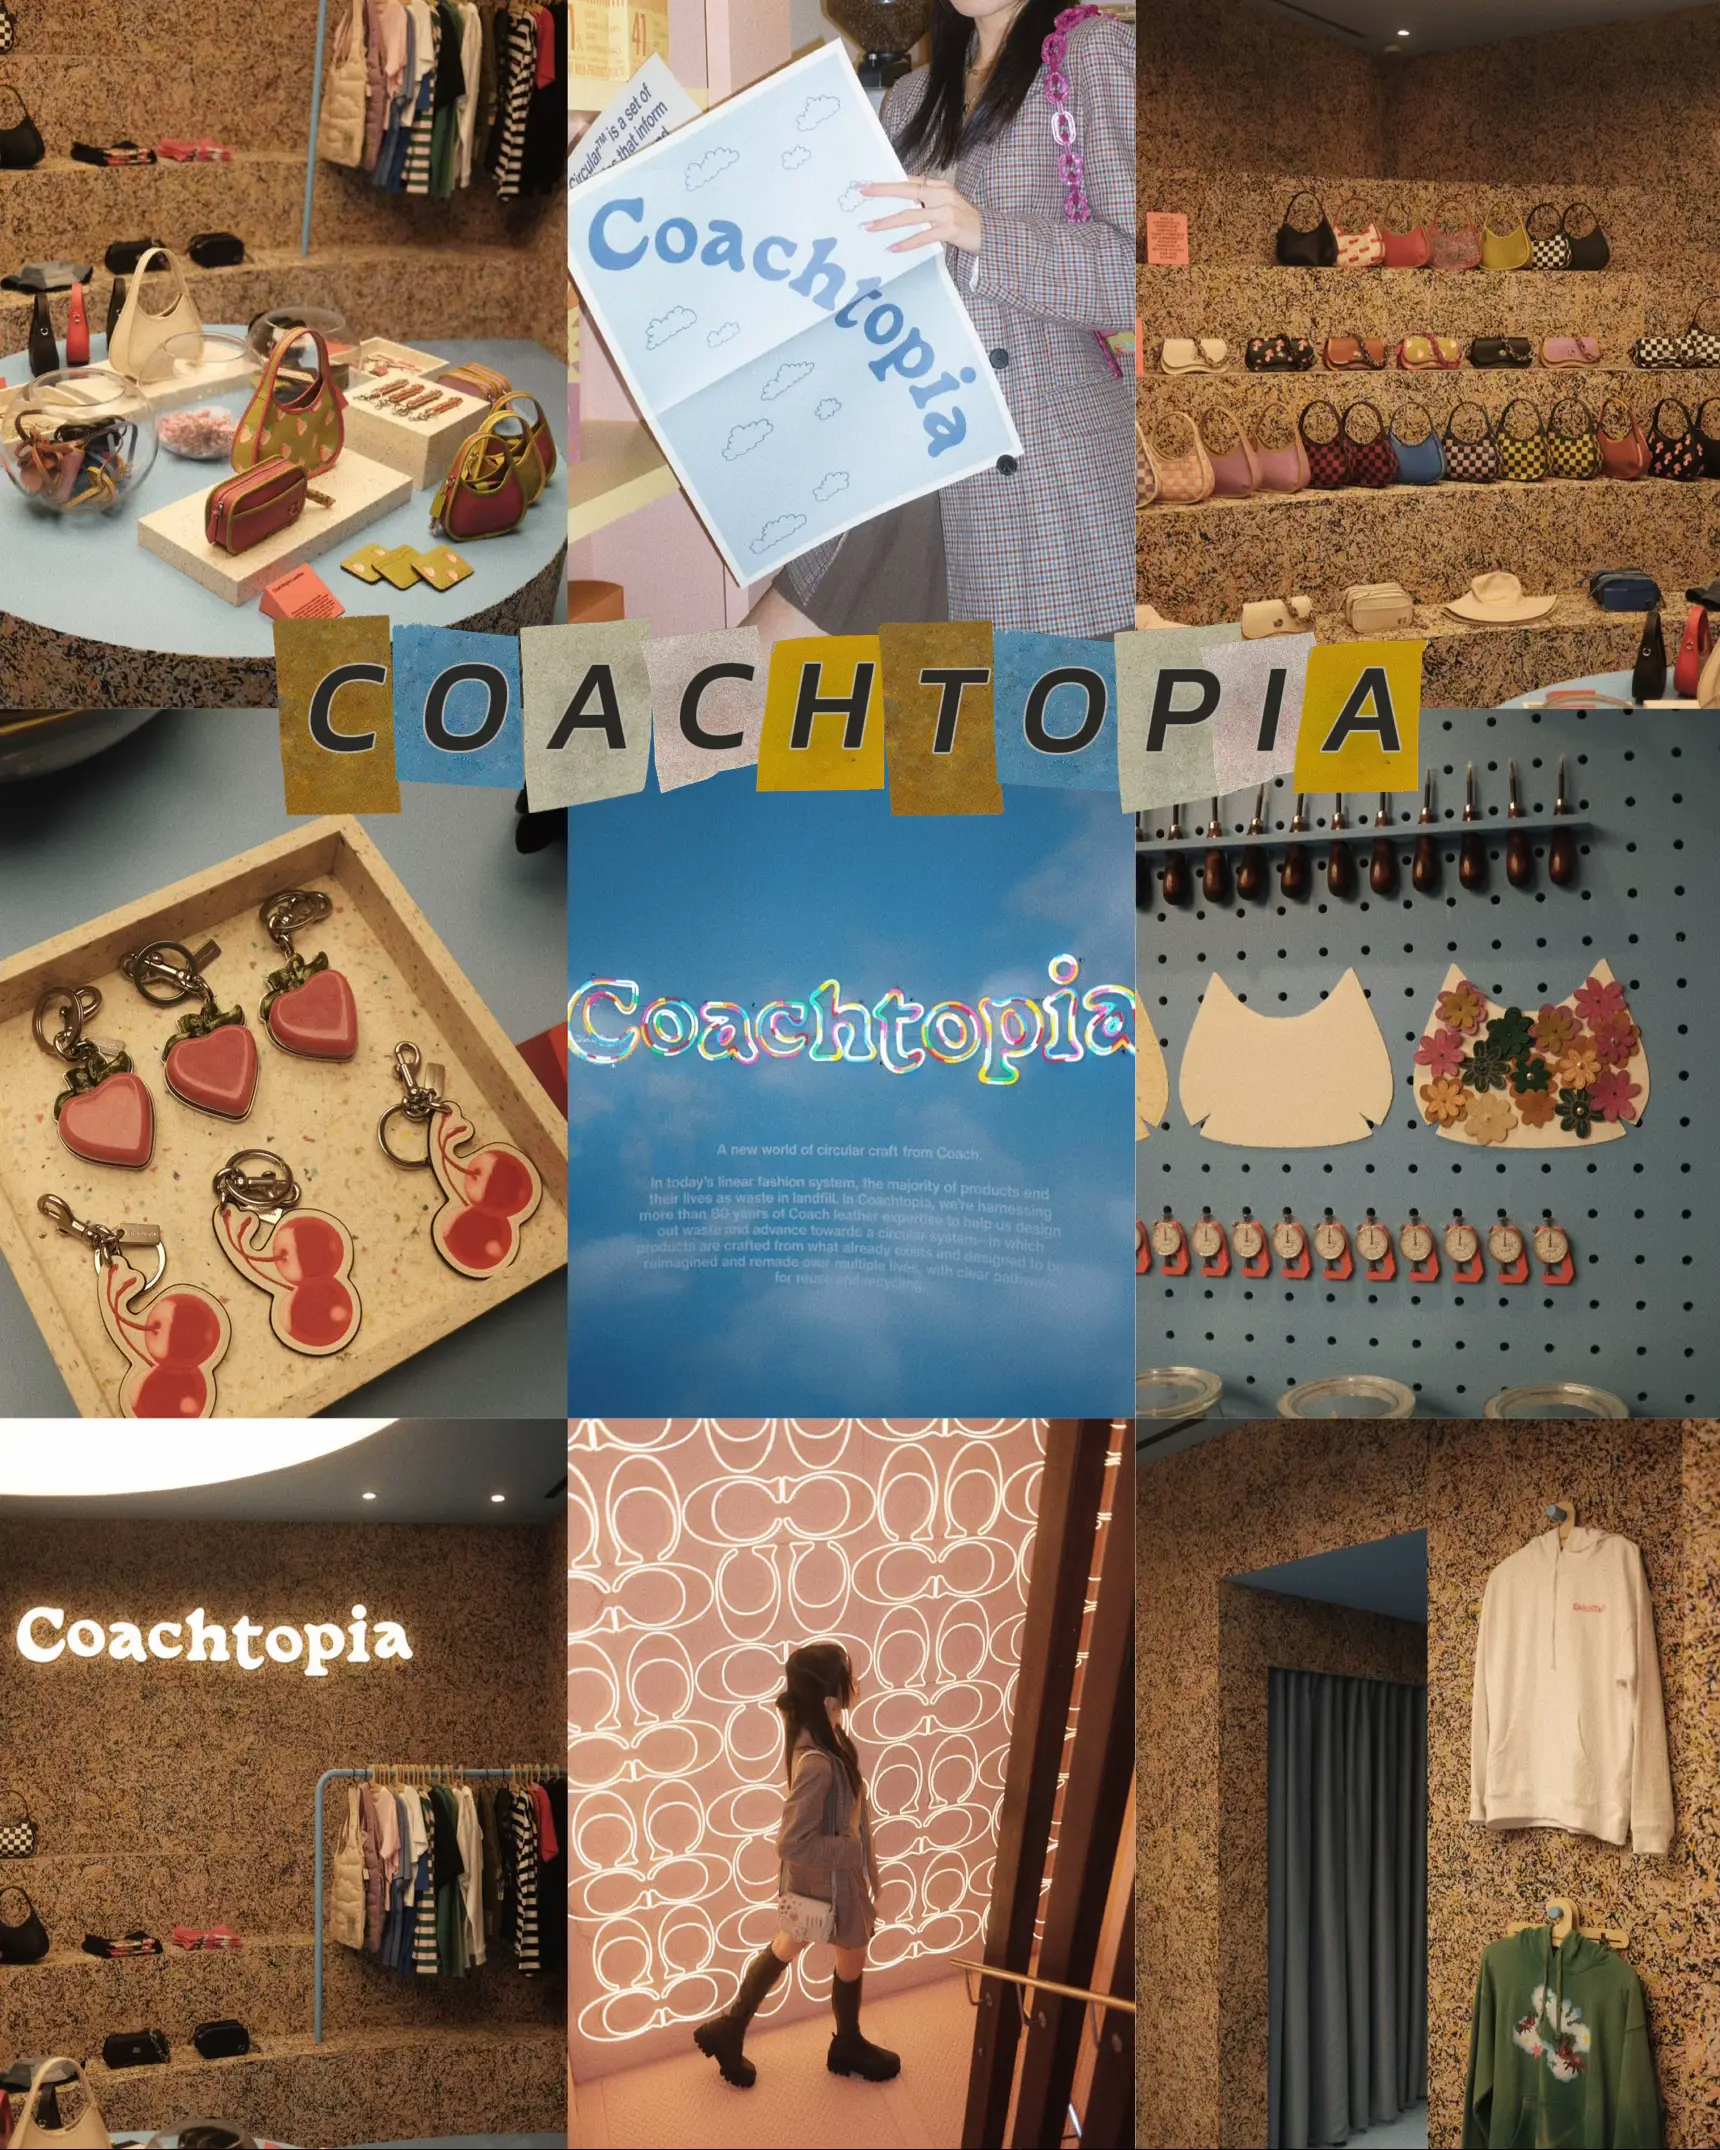 coachtopia's circular fashion philosophy - Lemon8 Search